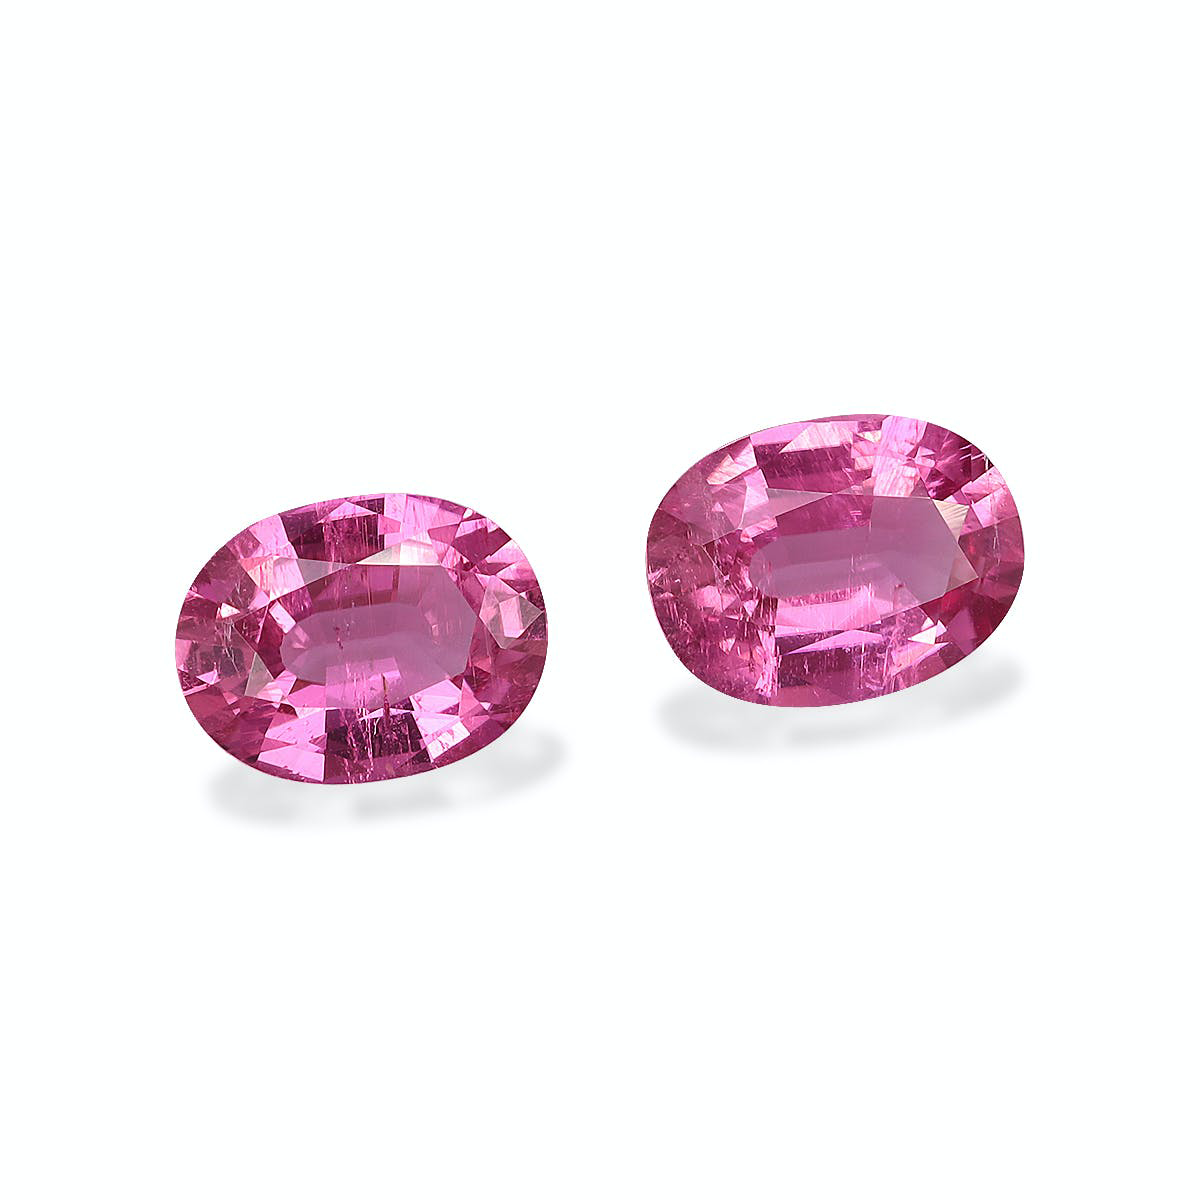 Fuscia Pink Rubellite Tourmaline 2.61ct - 8x6mm Pair (RL1276)